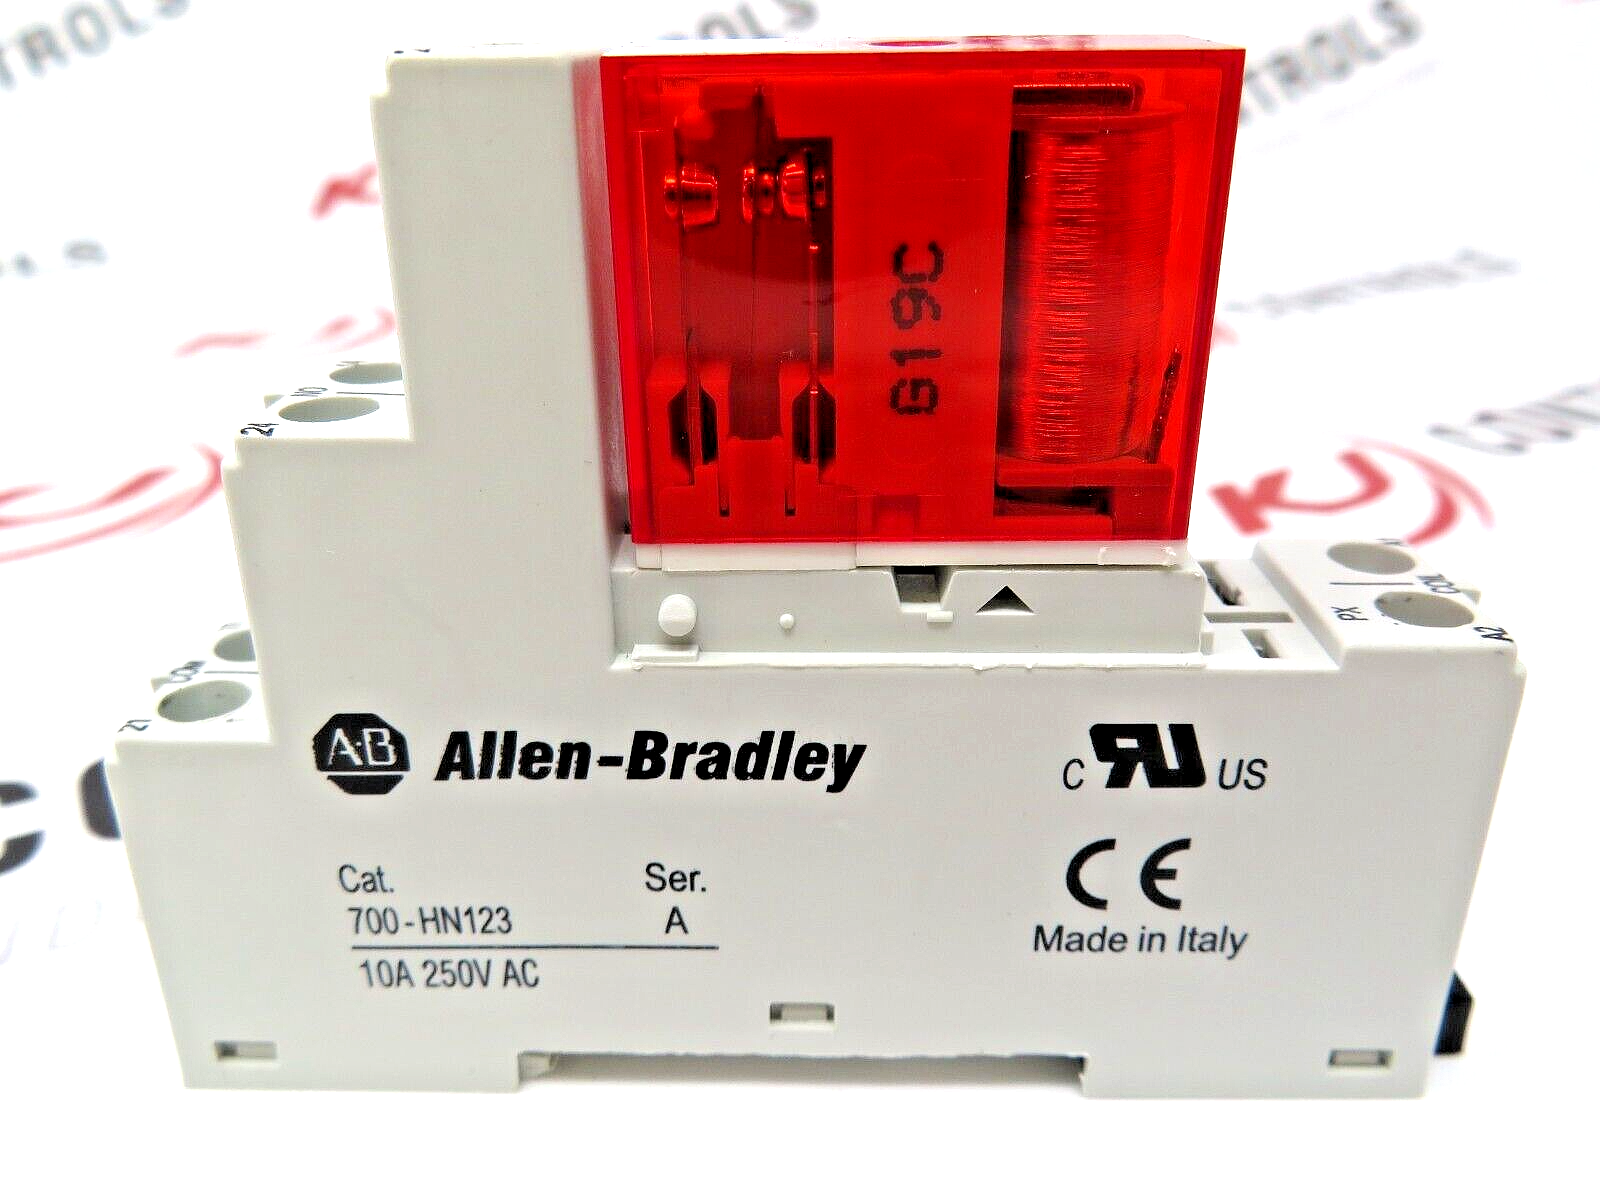 Allen-Bradley 700-HPS2Z24 Safety Relay 24DC With Base 700-HN123 10A 250VAC